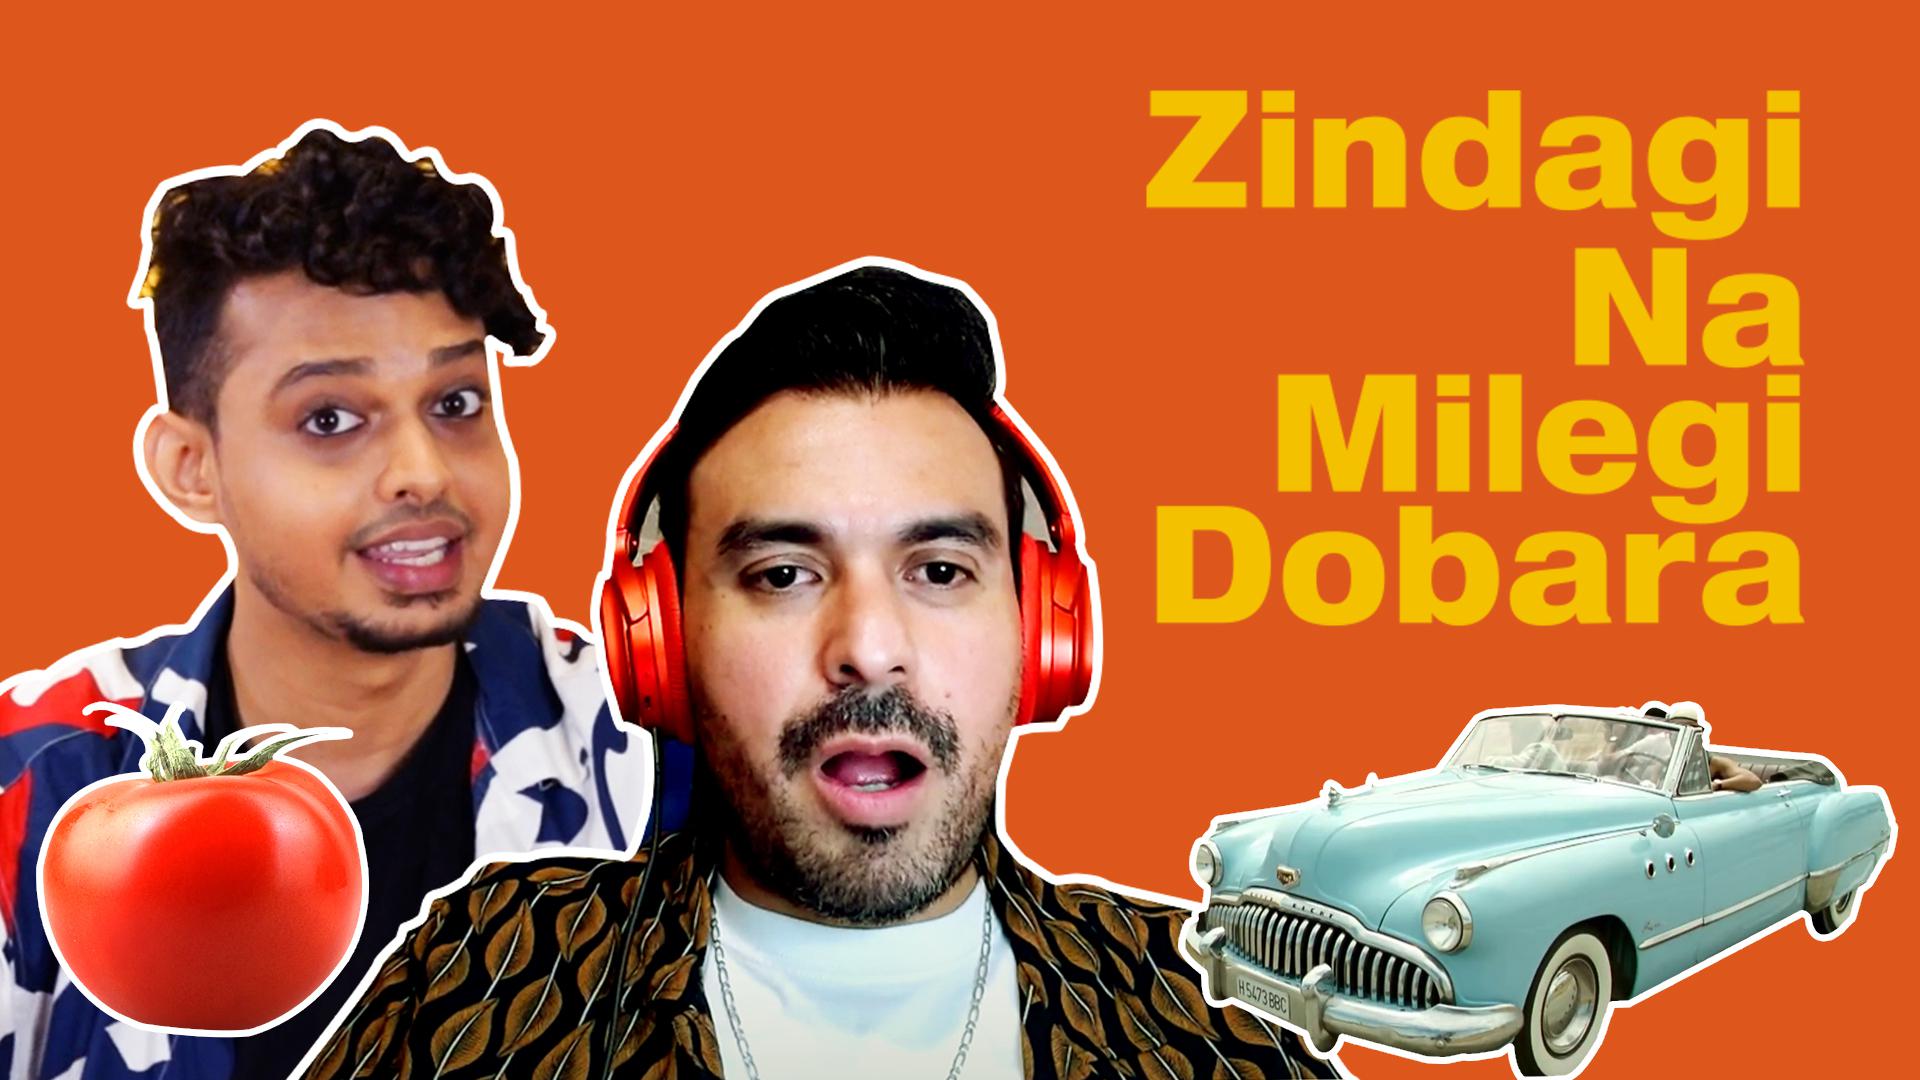 We Made @BuzzfeedLatam react to Zindagi Na Milegi Dobara